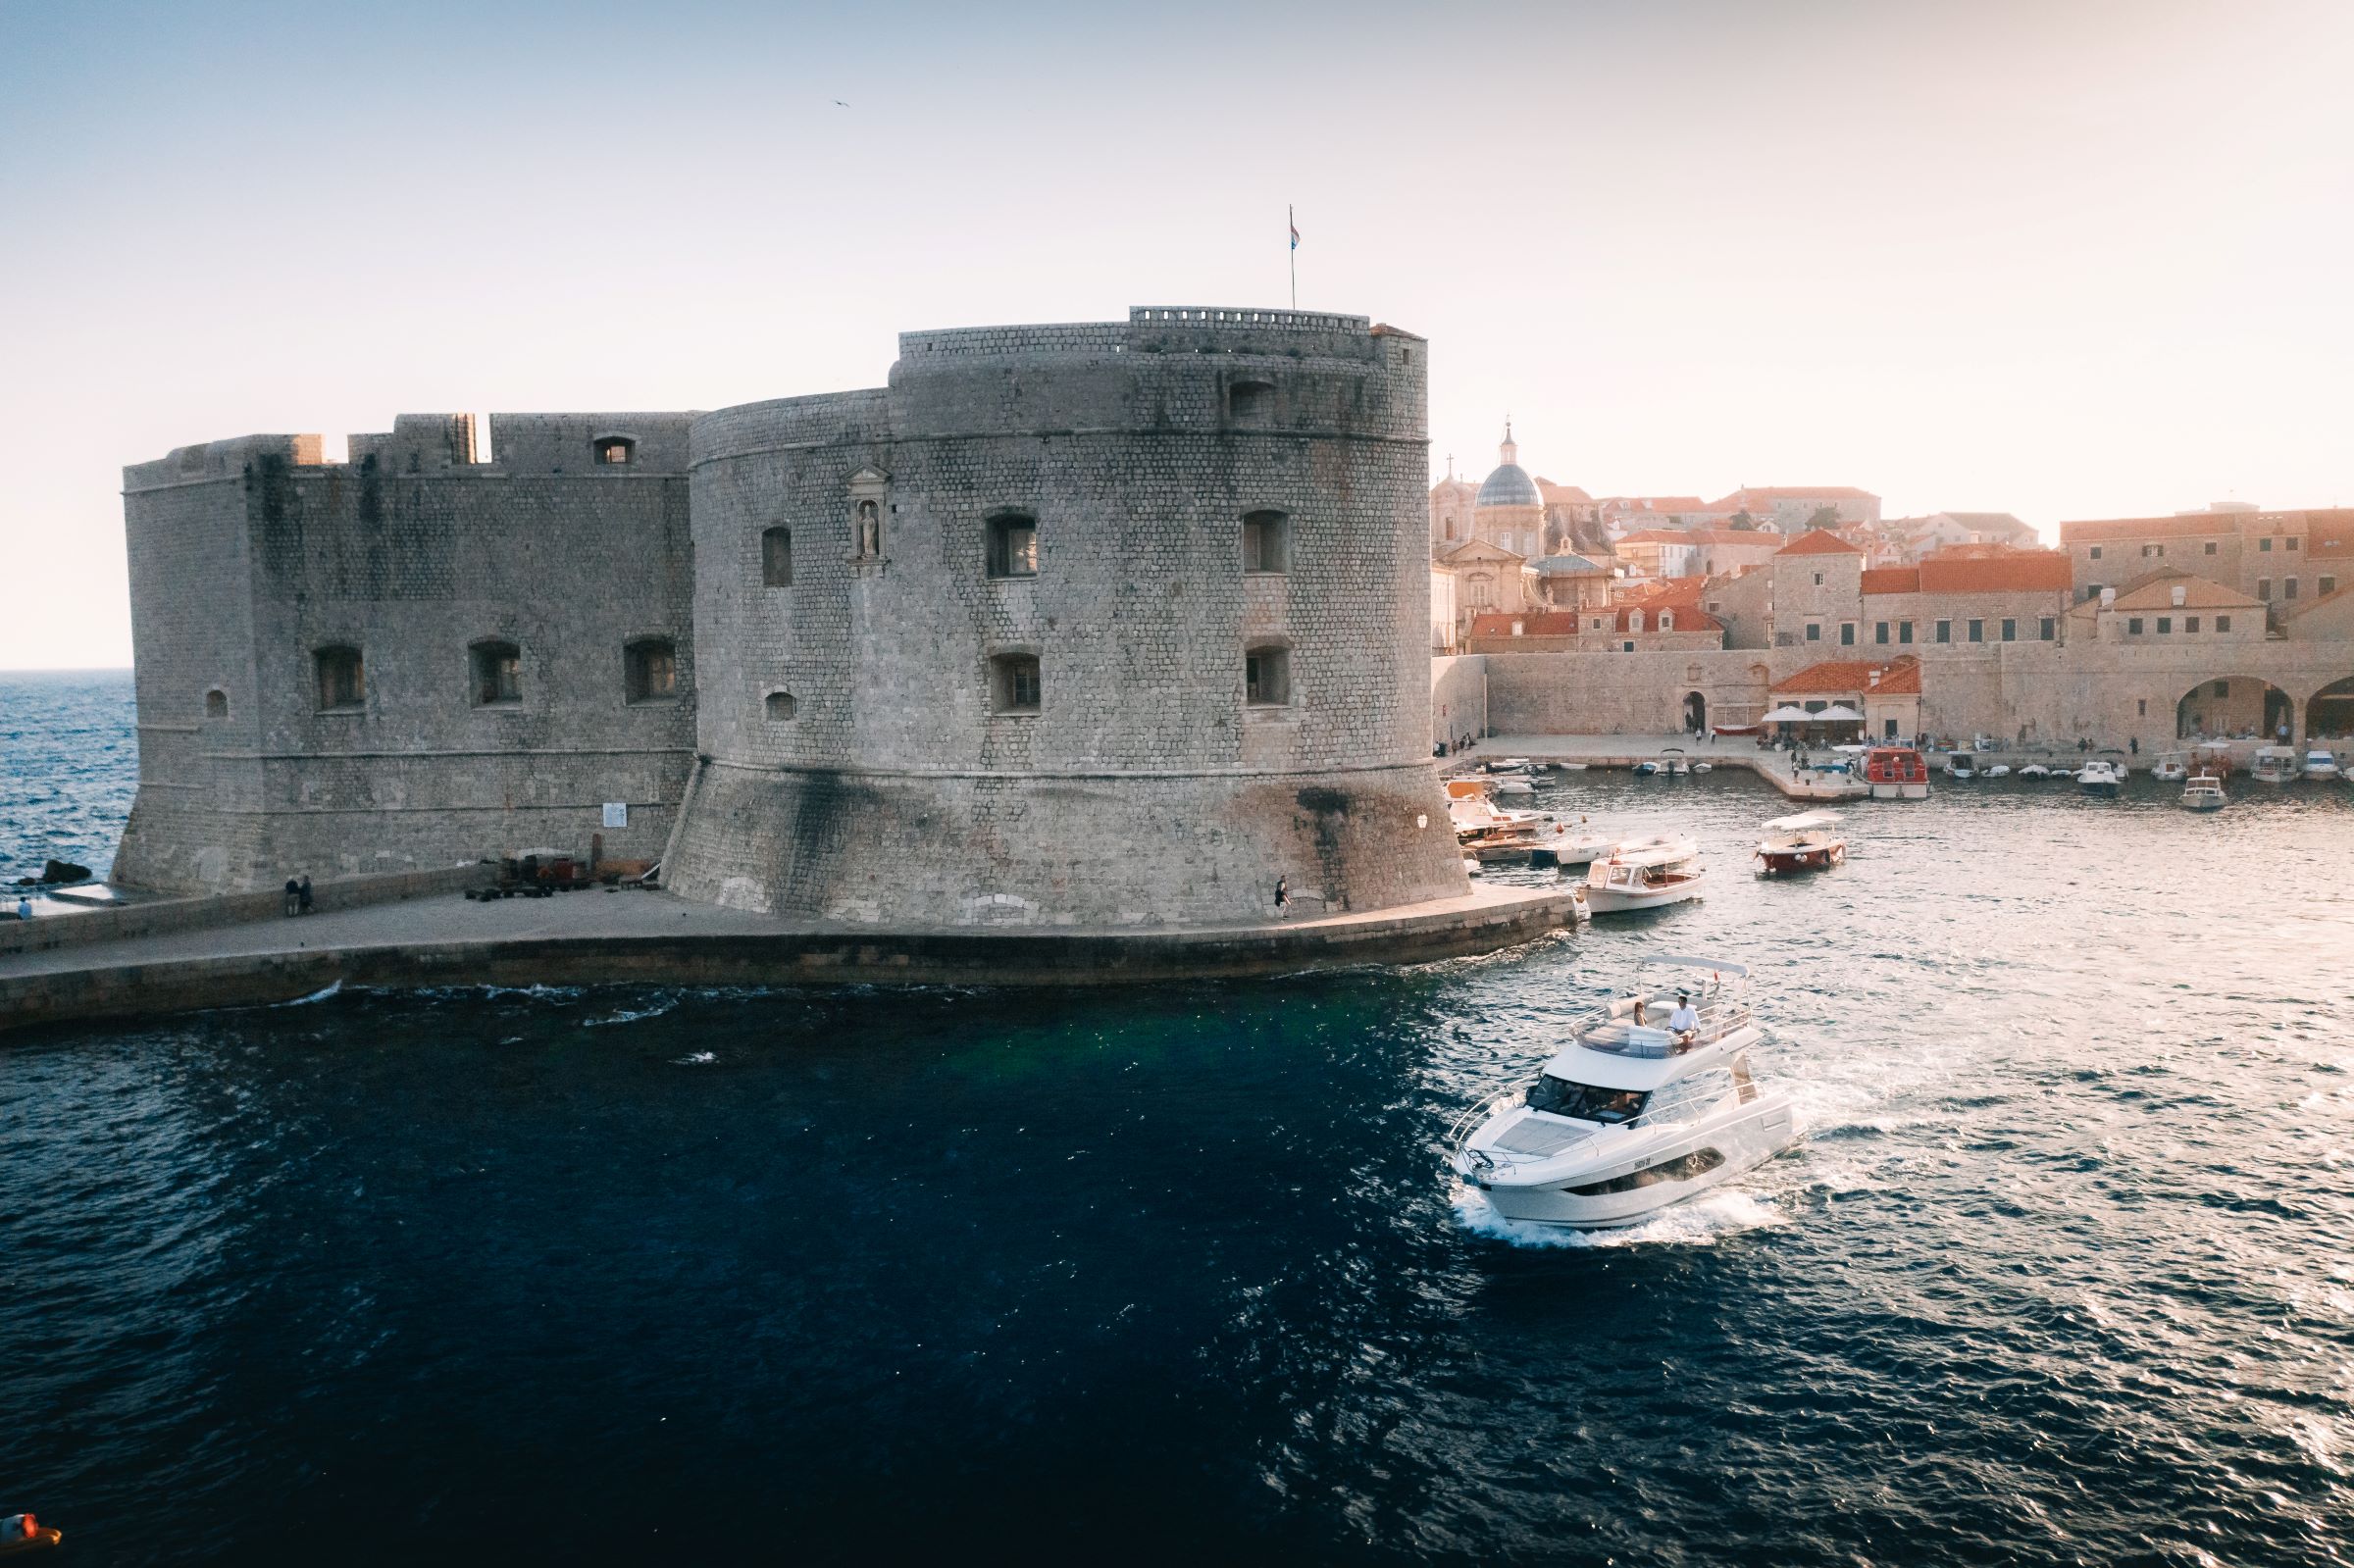 Croatia Family Yacht Charter Vacation - Why Book a Family Yacht Holiday